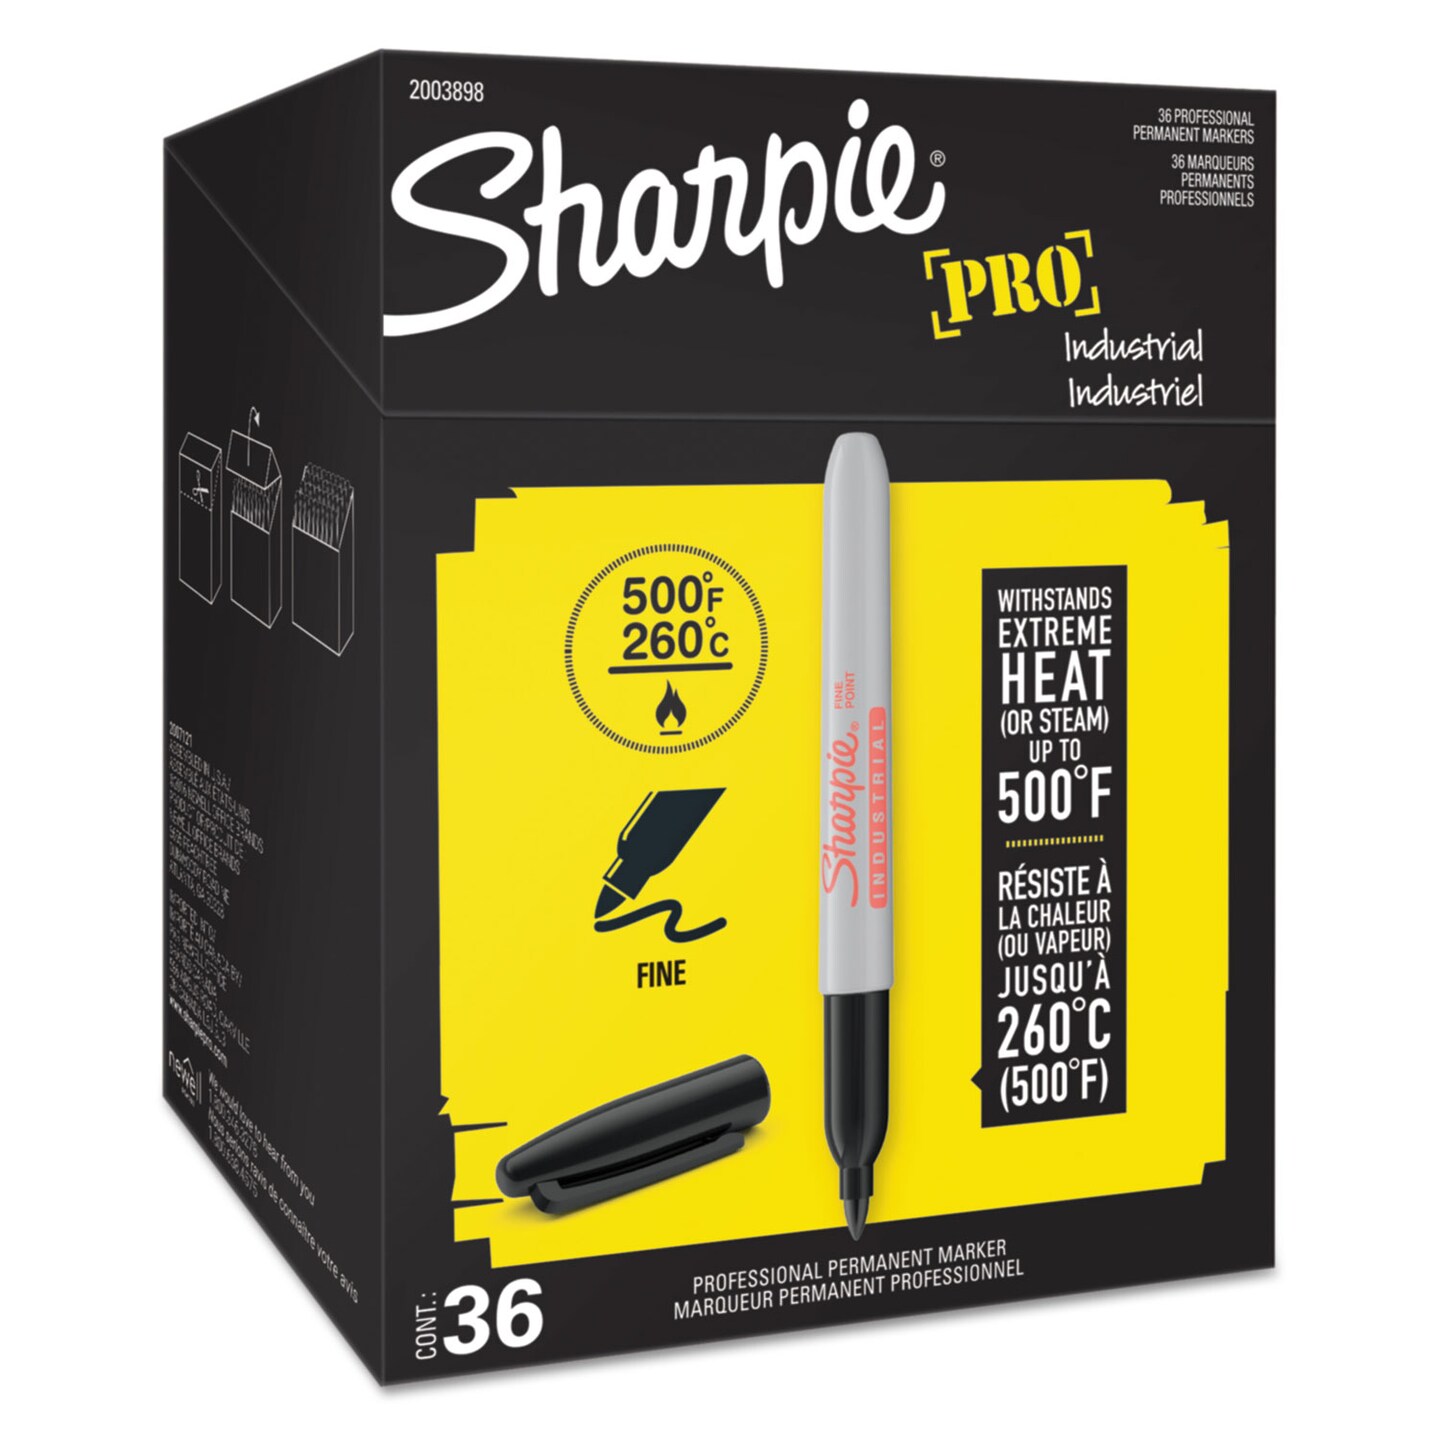 Sharpie Industrial Permanent Marker - Fine Tip - Black